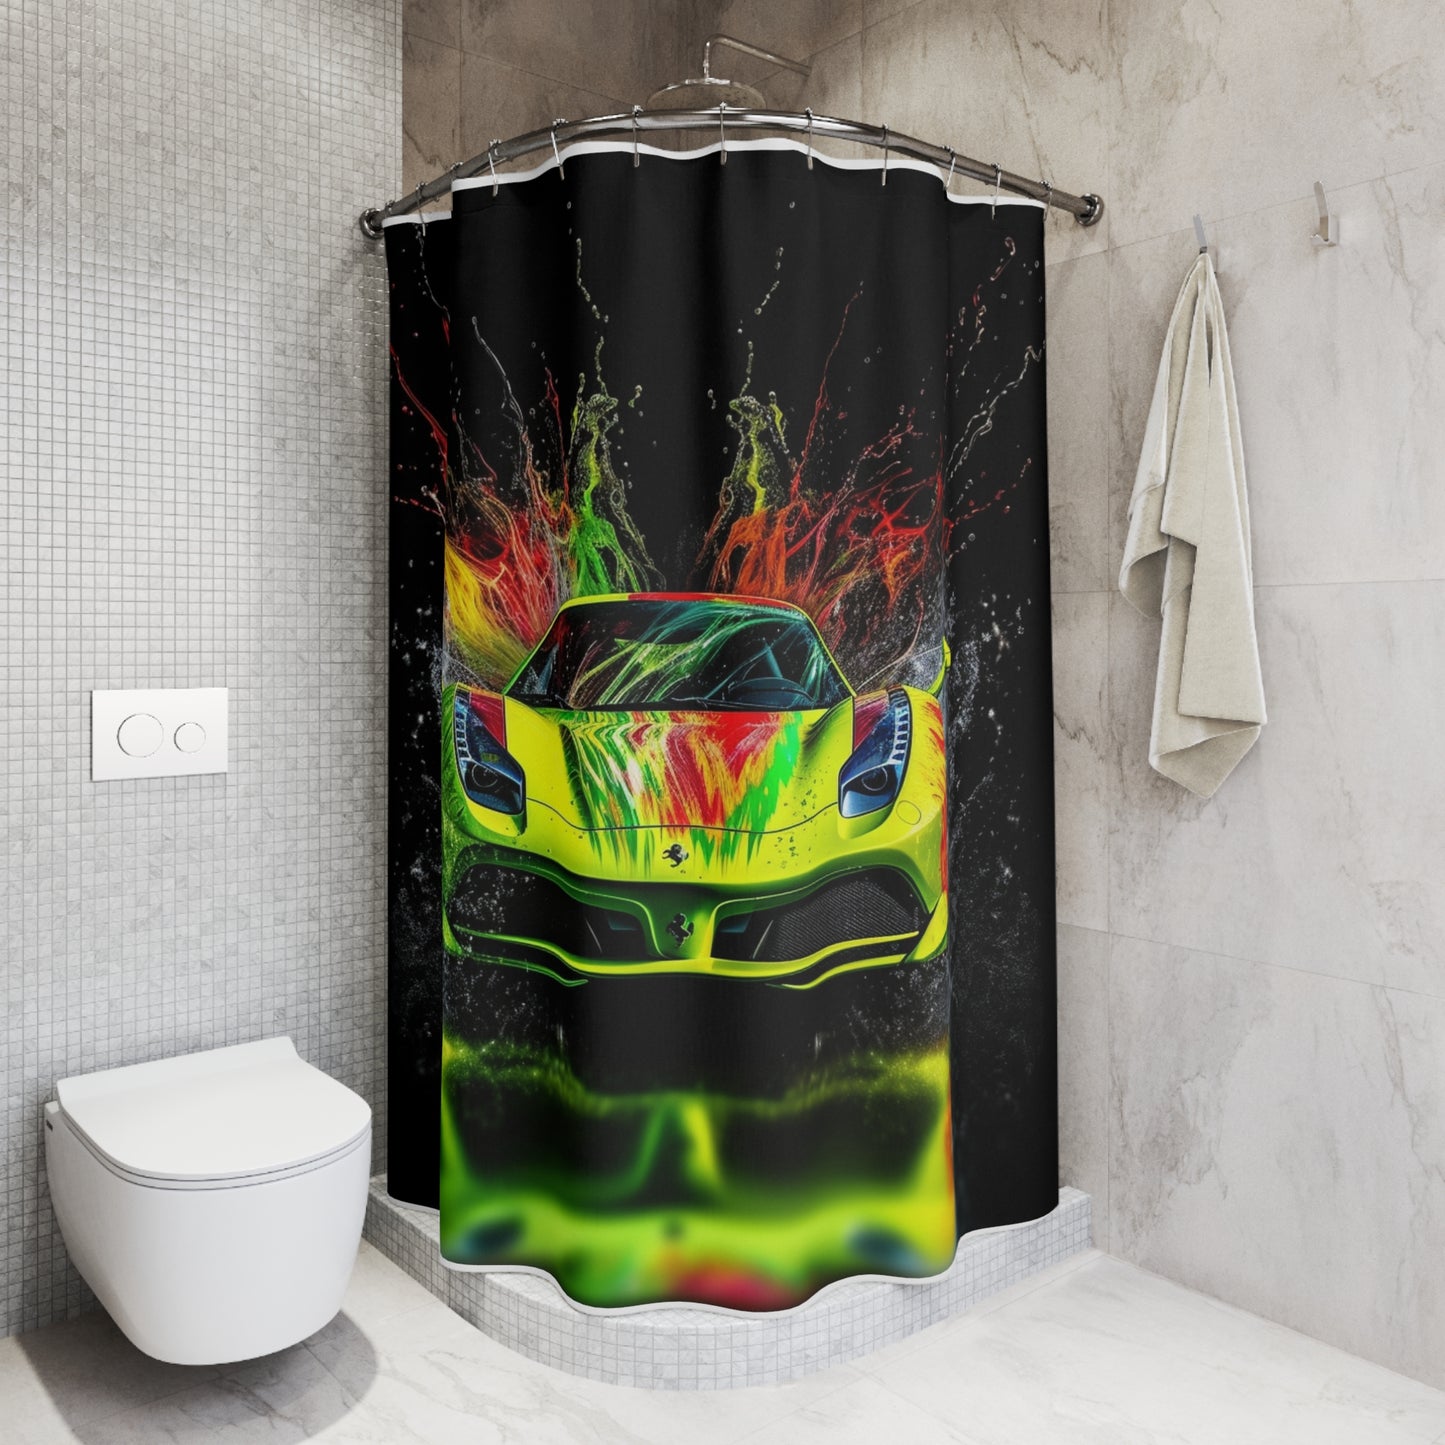 Polyester Shower Curtain Farrari Water 1